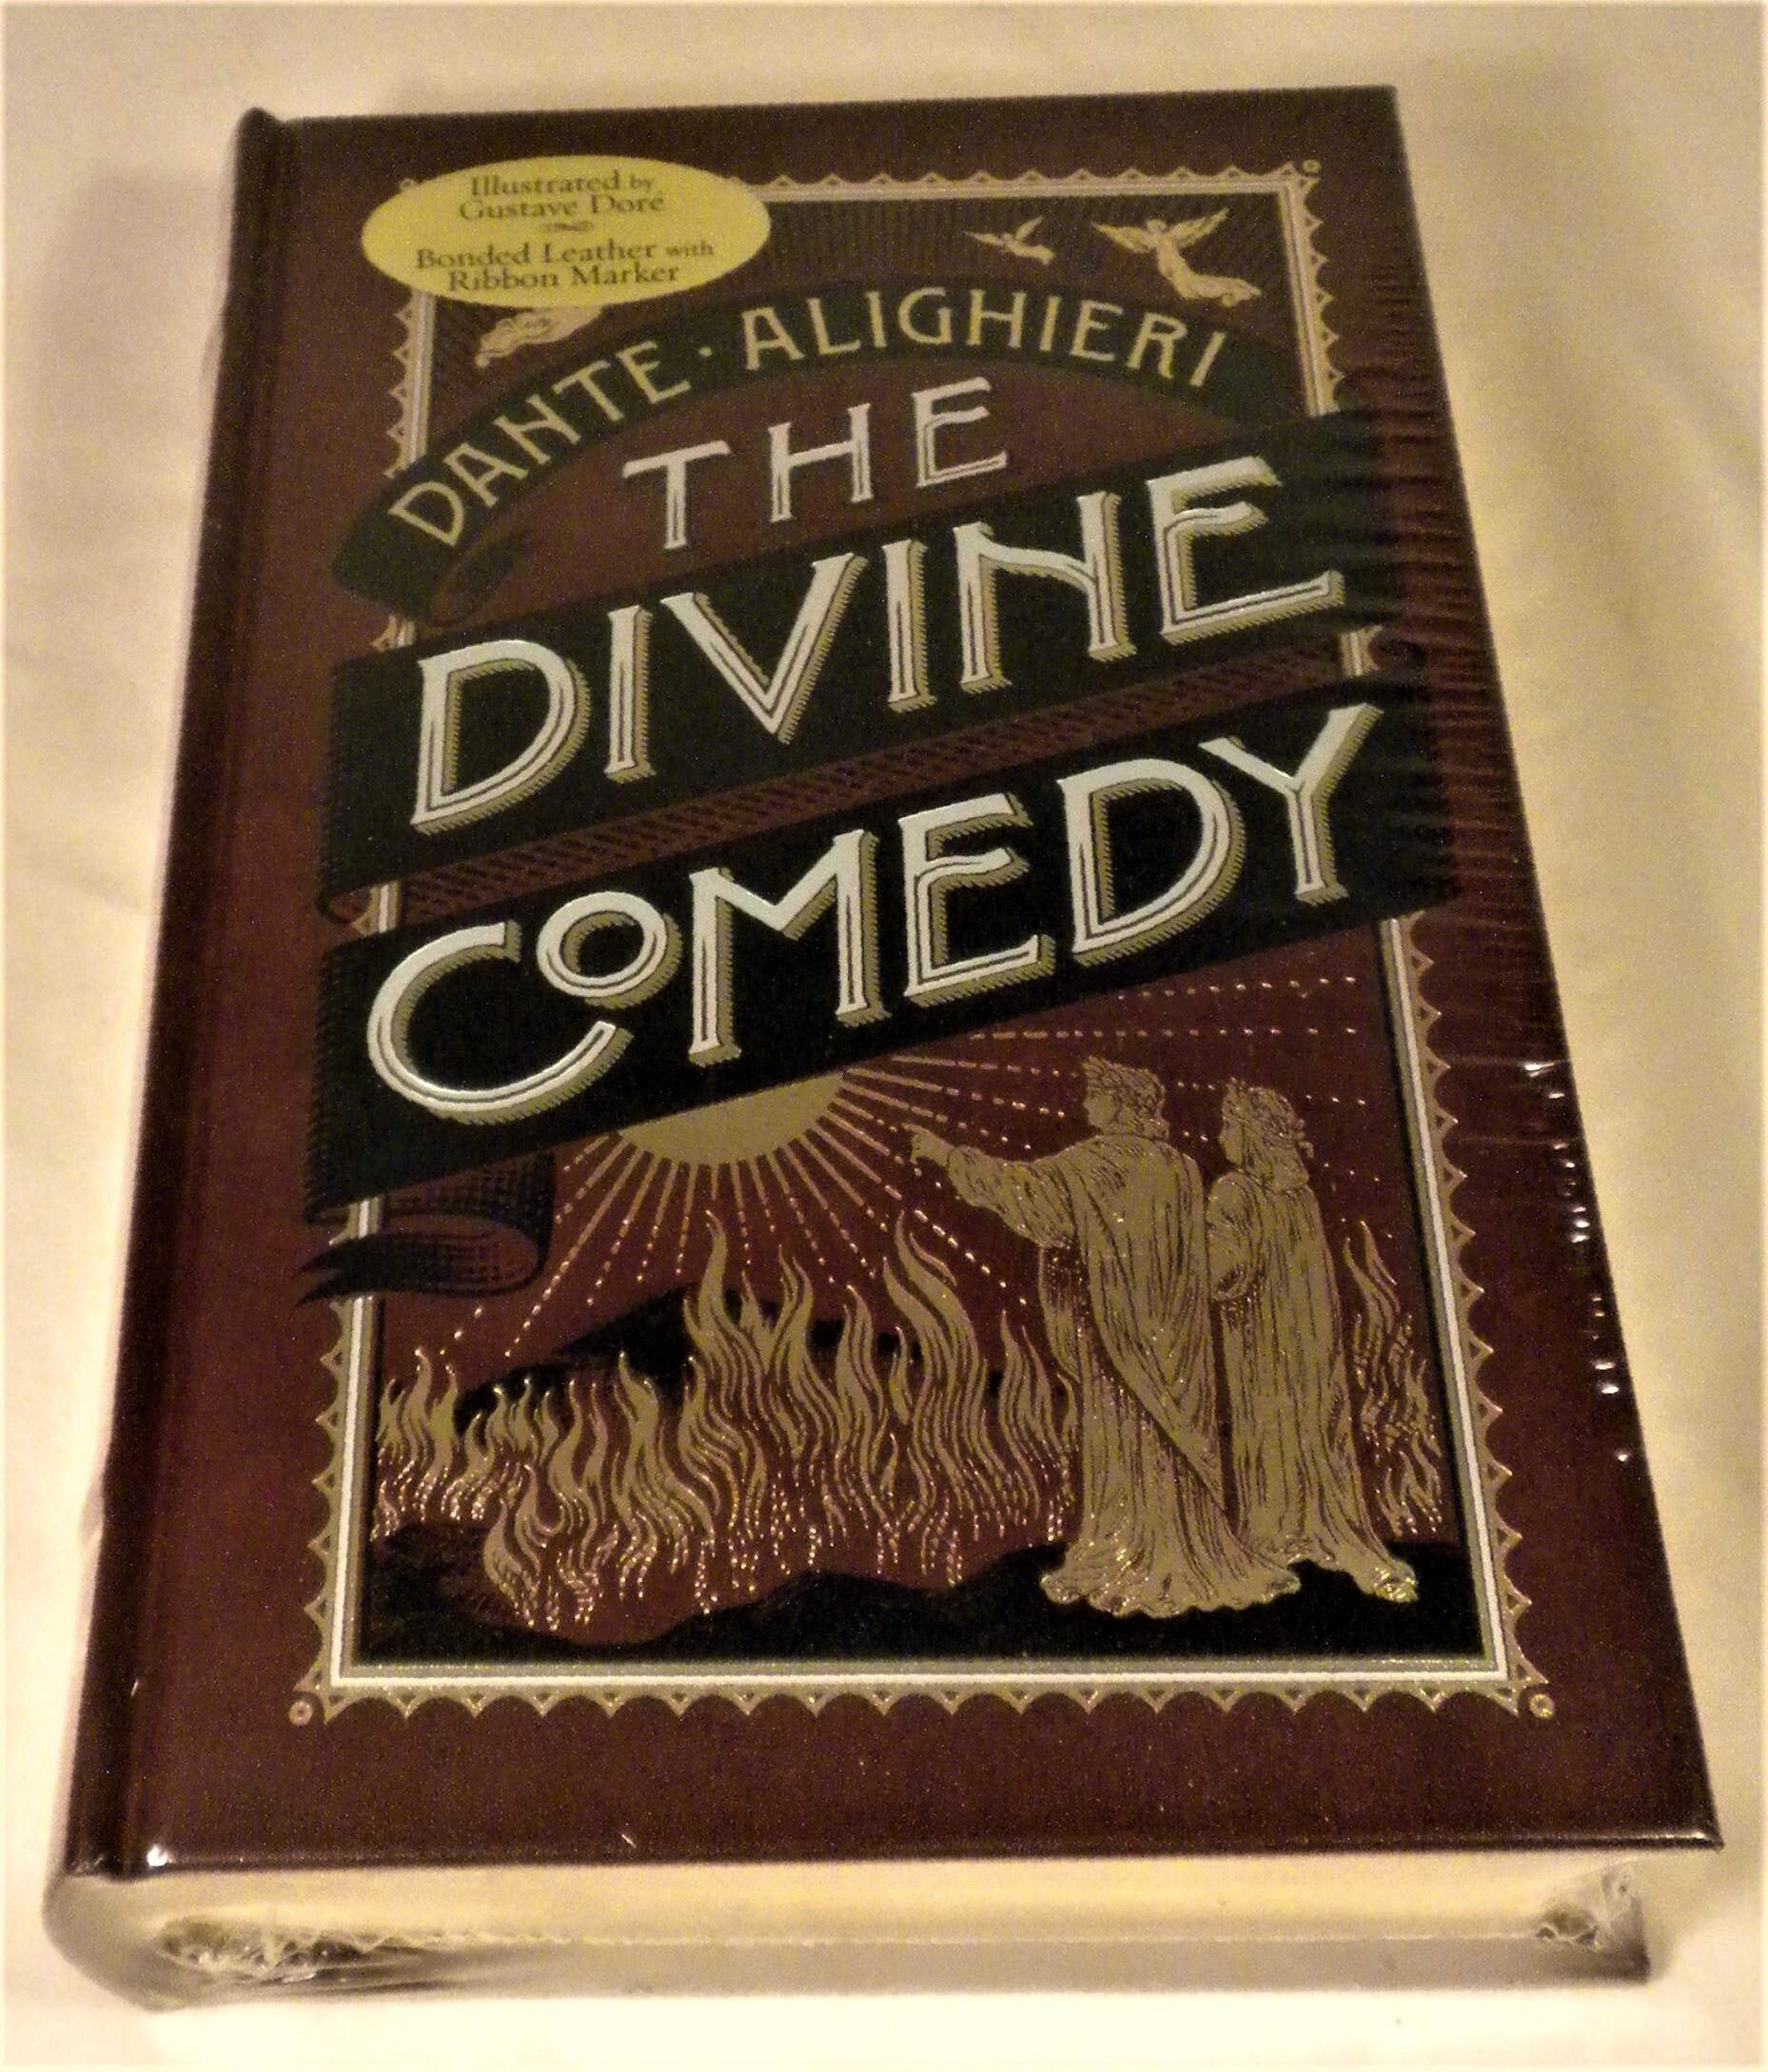 The Divine Comedy by Dante Alighieri